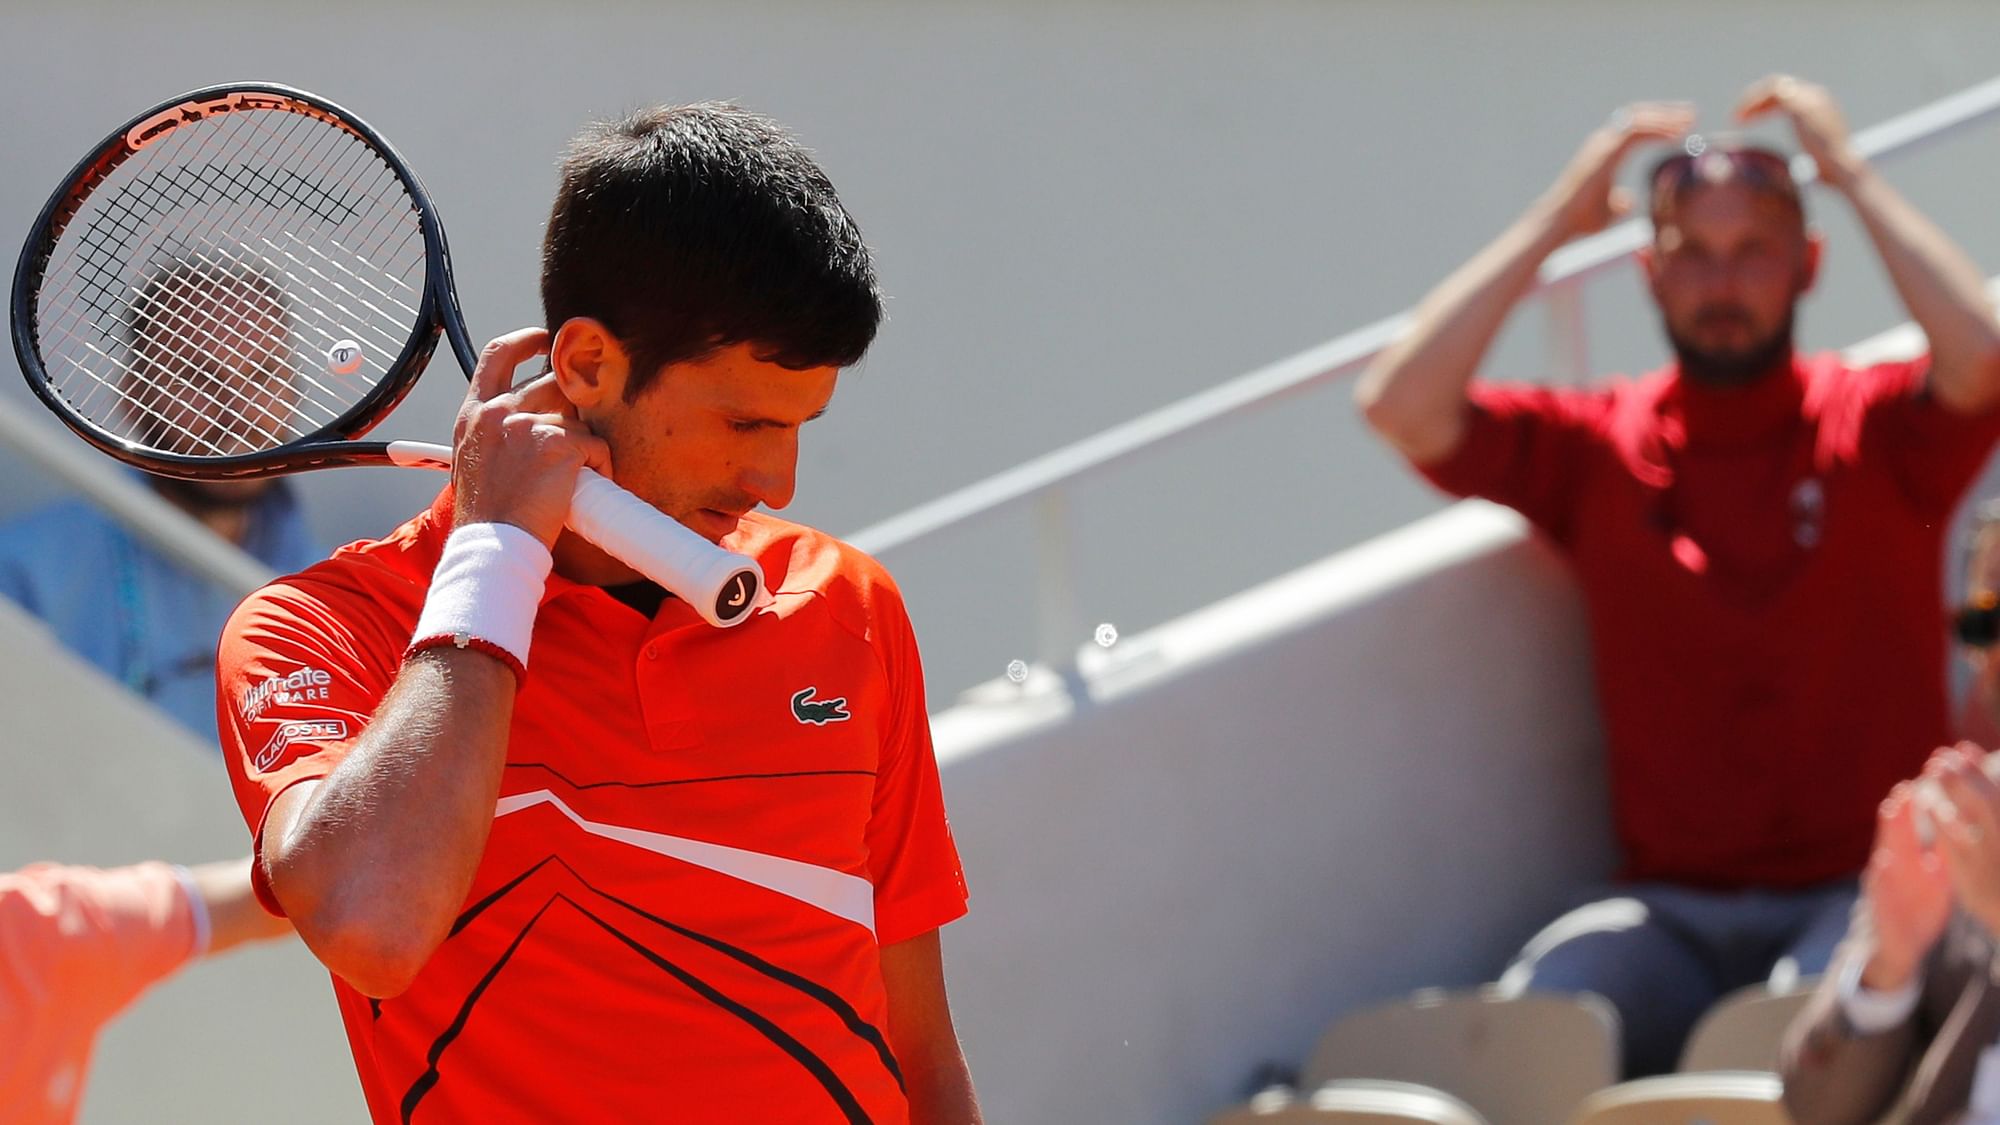 Novak Djokovic’s 26-match Grand Slam winning streak ended with a dramatic 6-2, 3-6, 7-5, 5-7, 7-5 loss to Dominic Thiem.